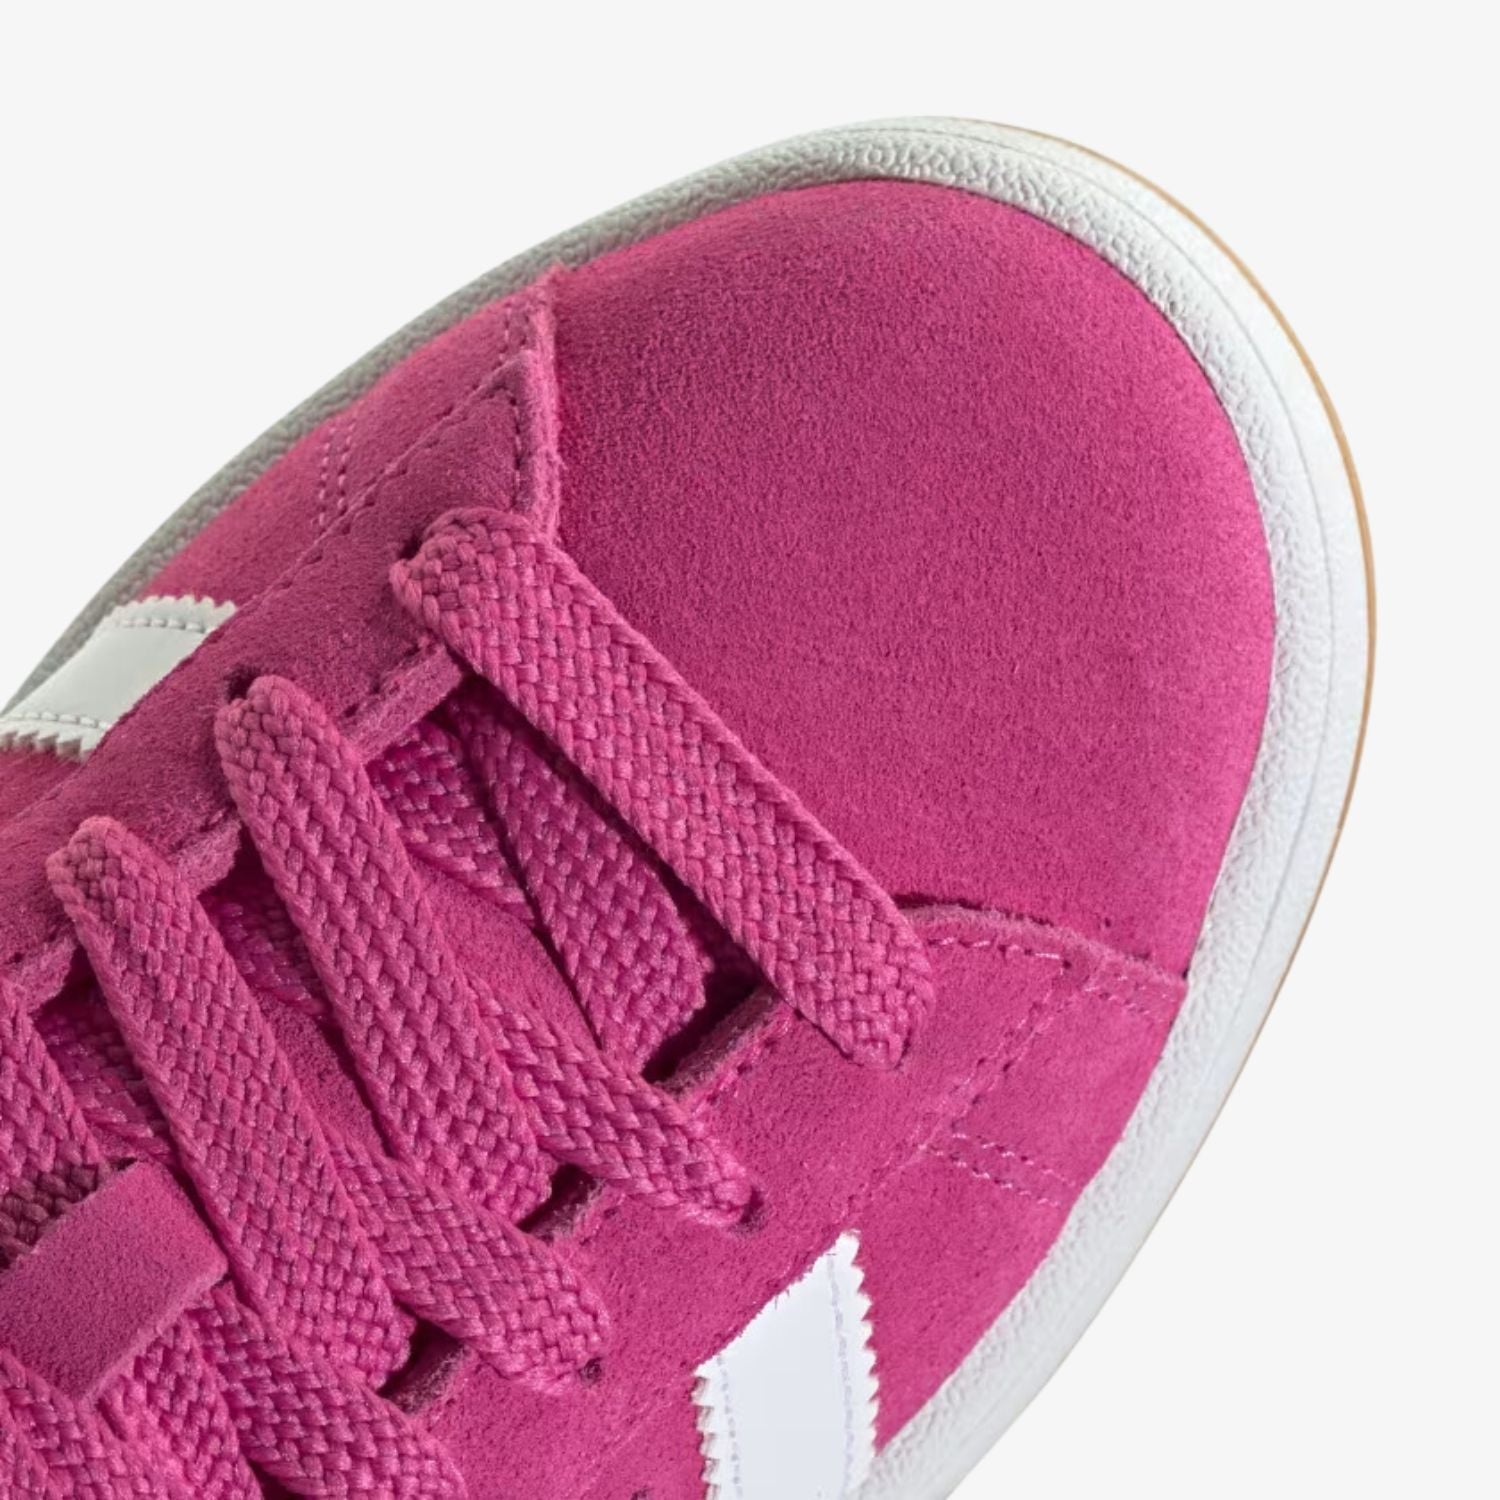 adidas-campus-00-pink-fuchsia-unfazed-9